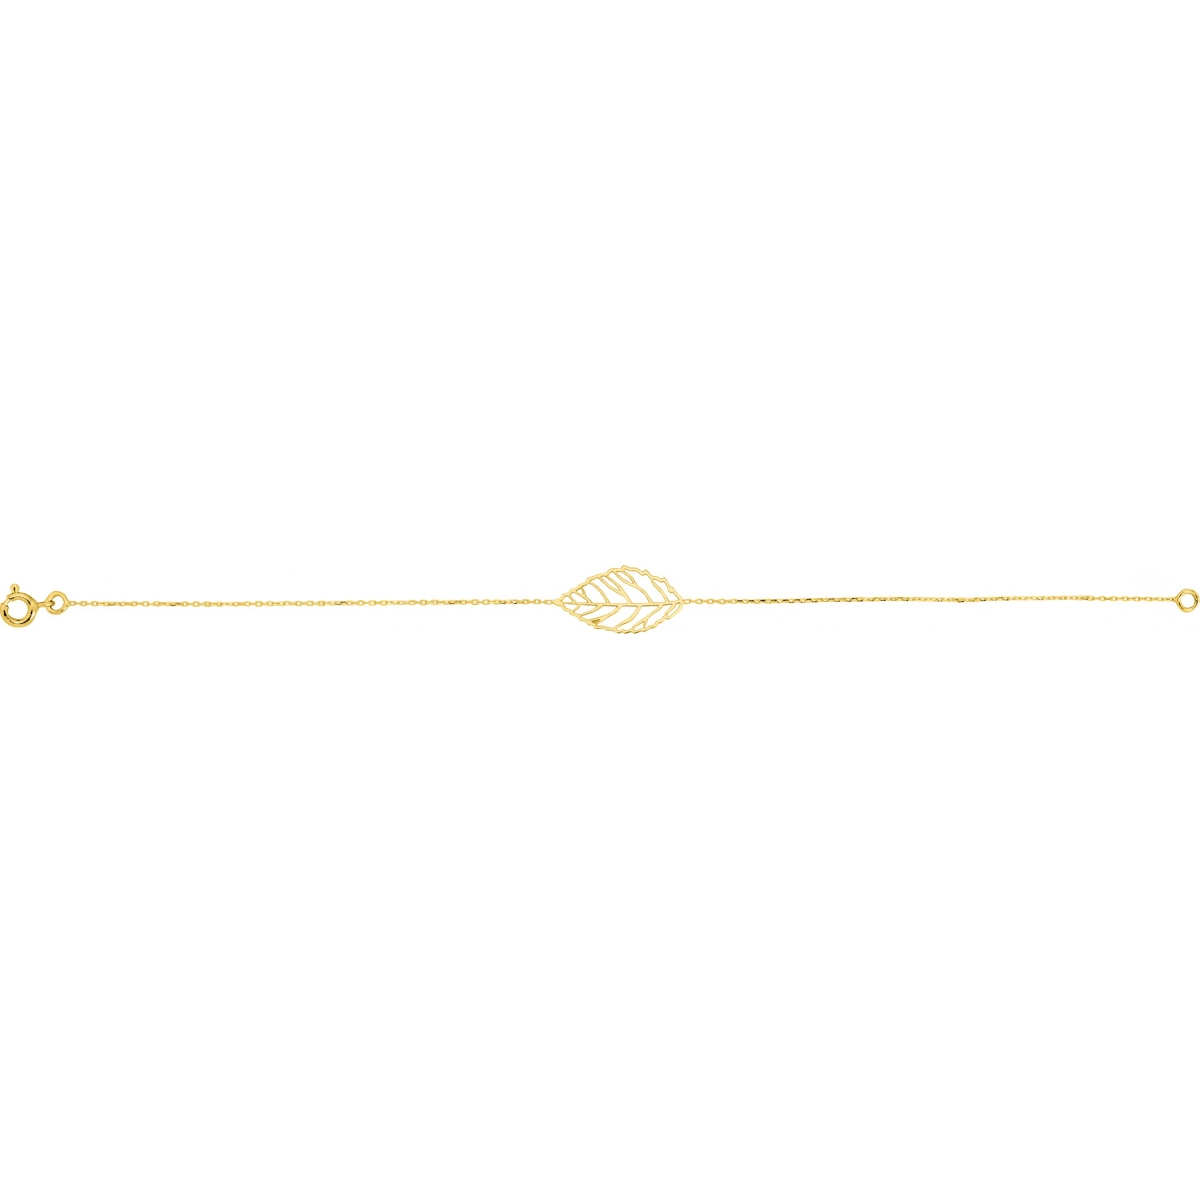 Bracelet gold plated Brass - Size: 18  Lua Blanca  133225.18